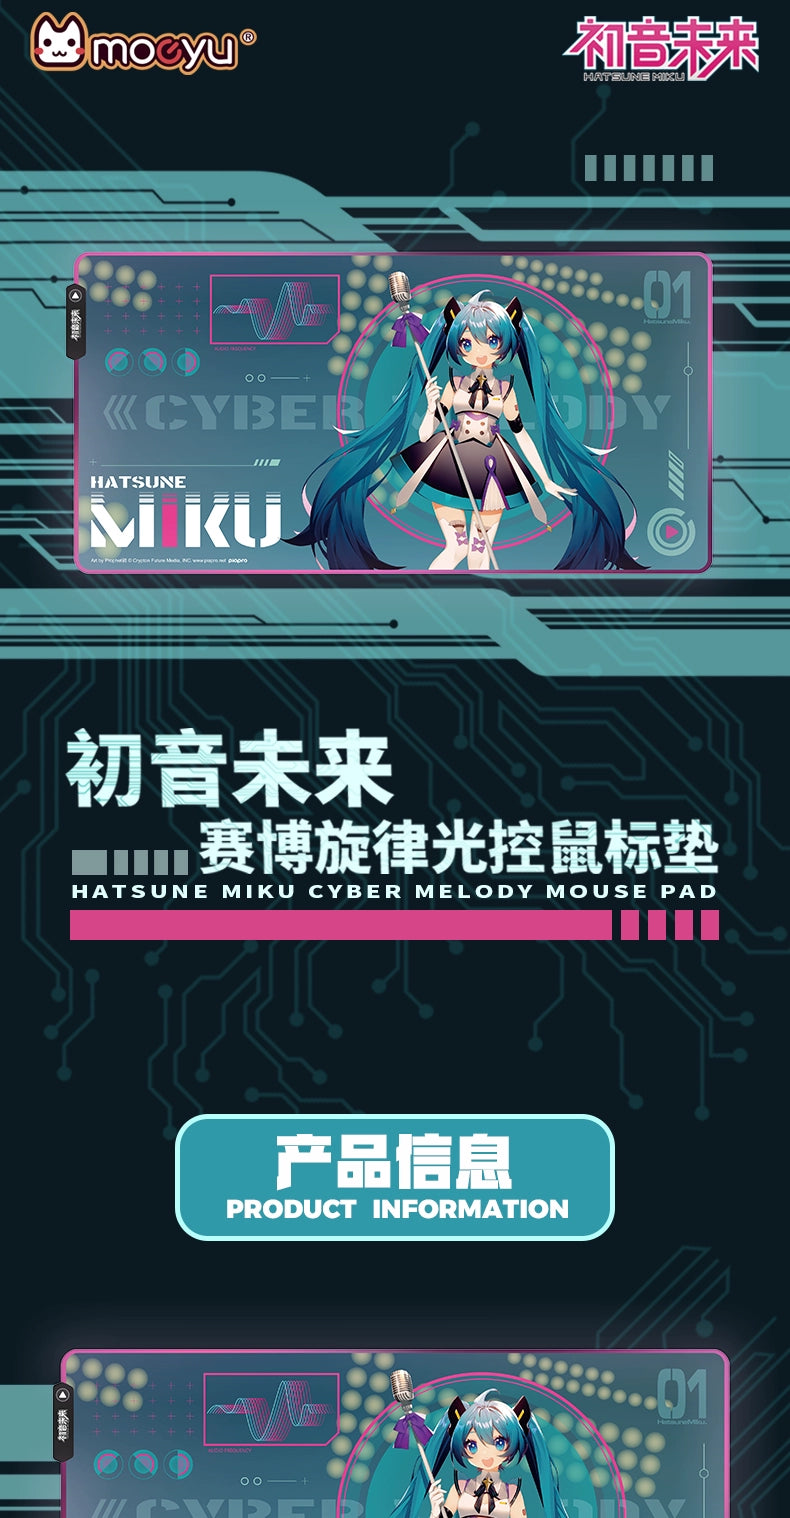 Moeyu Hatsune Miku Cyber Melody Desk/Mouse Pad